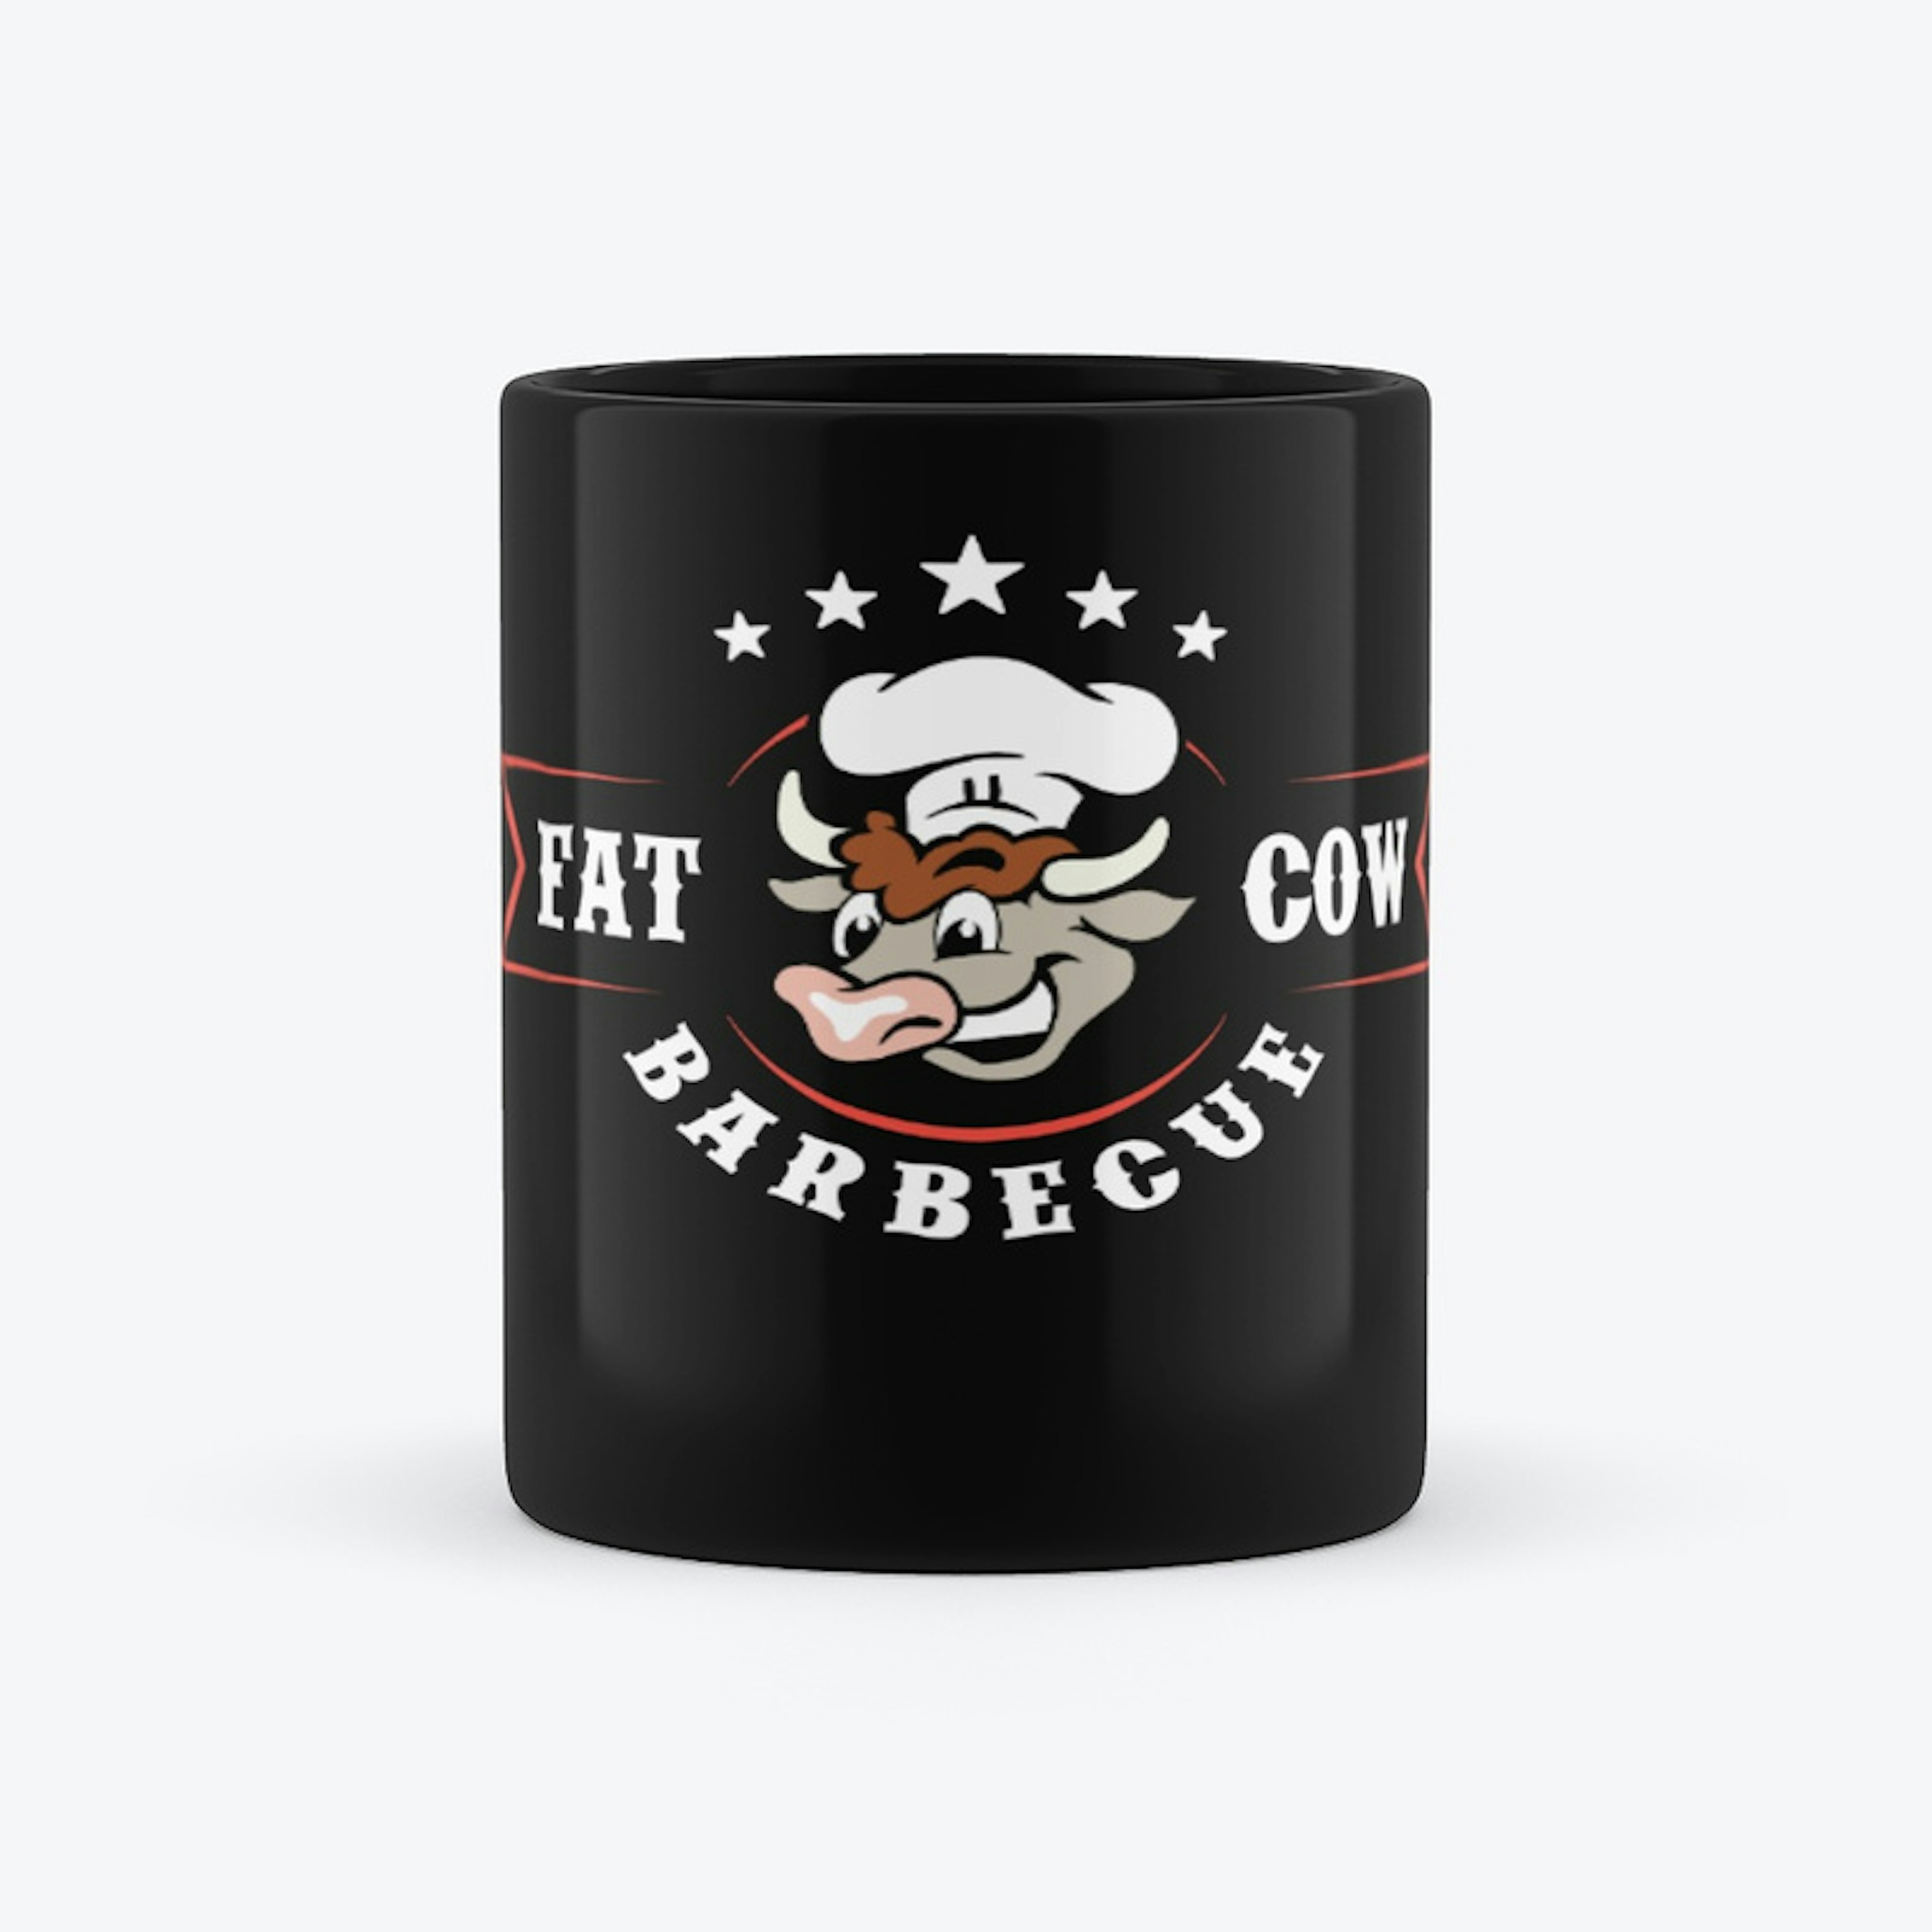 Fat Cow Barbecue Mug